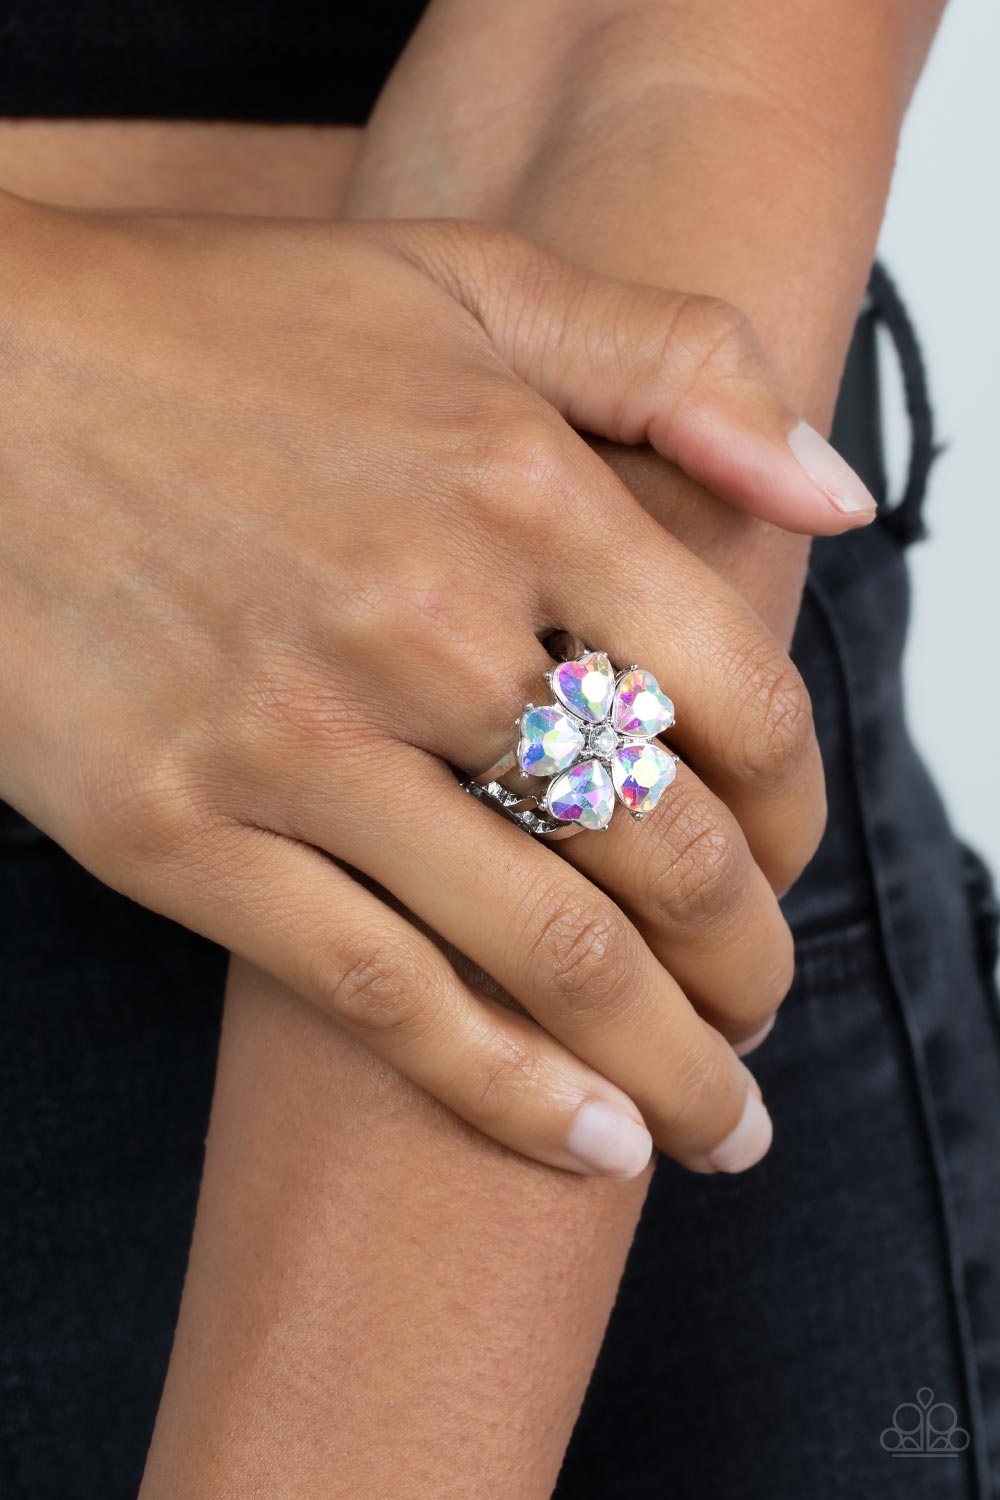 Minnesota Magic - Multi-Color Iridescent Flower Ring